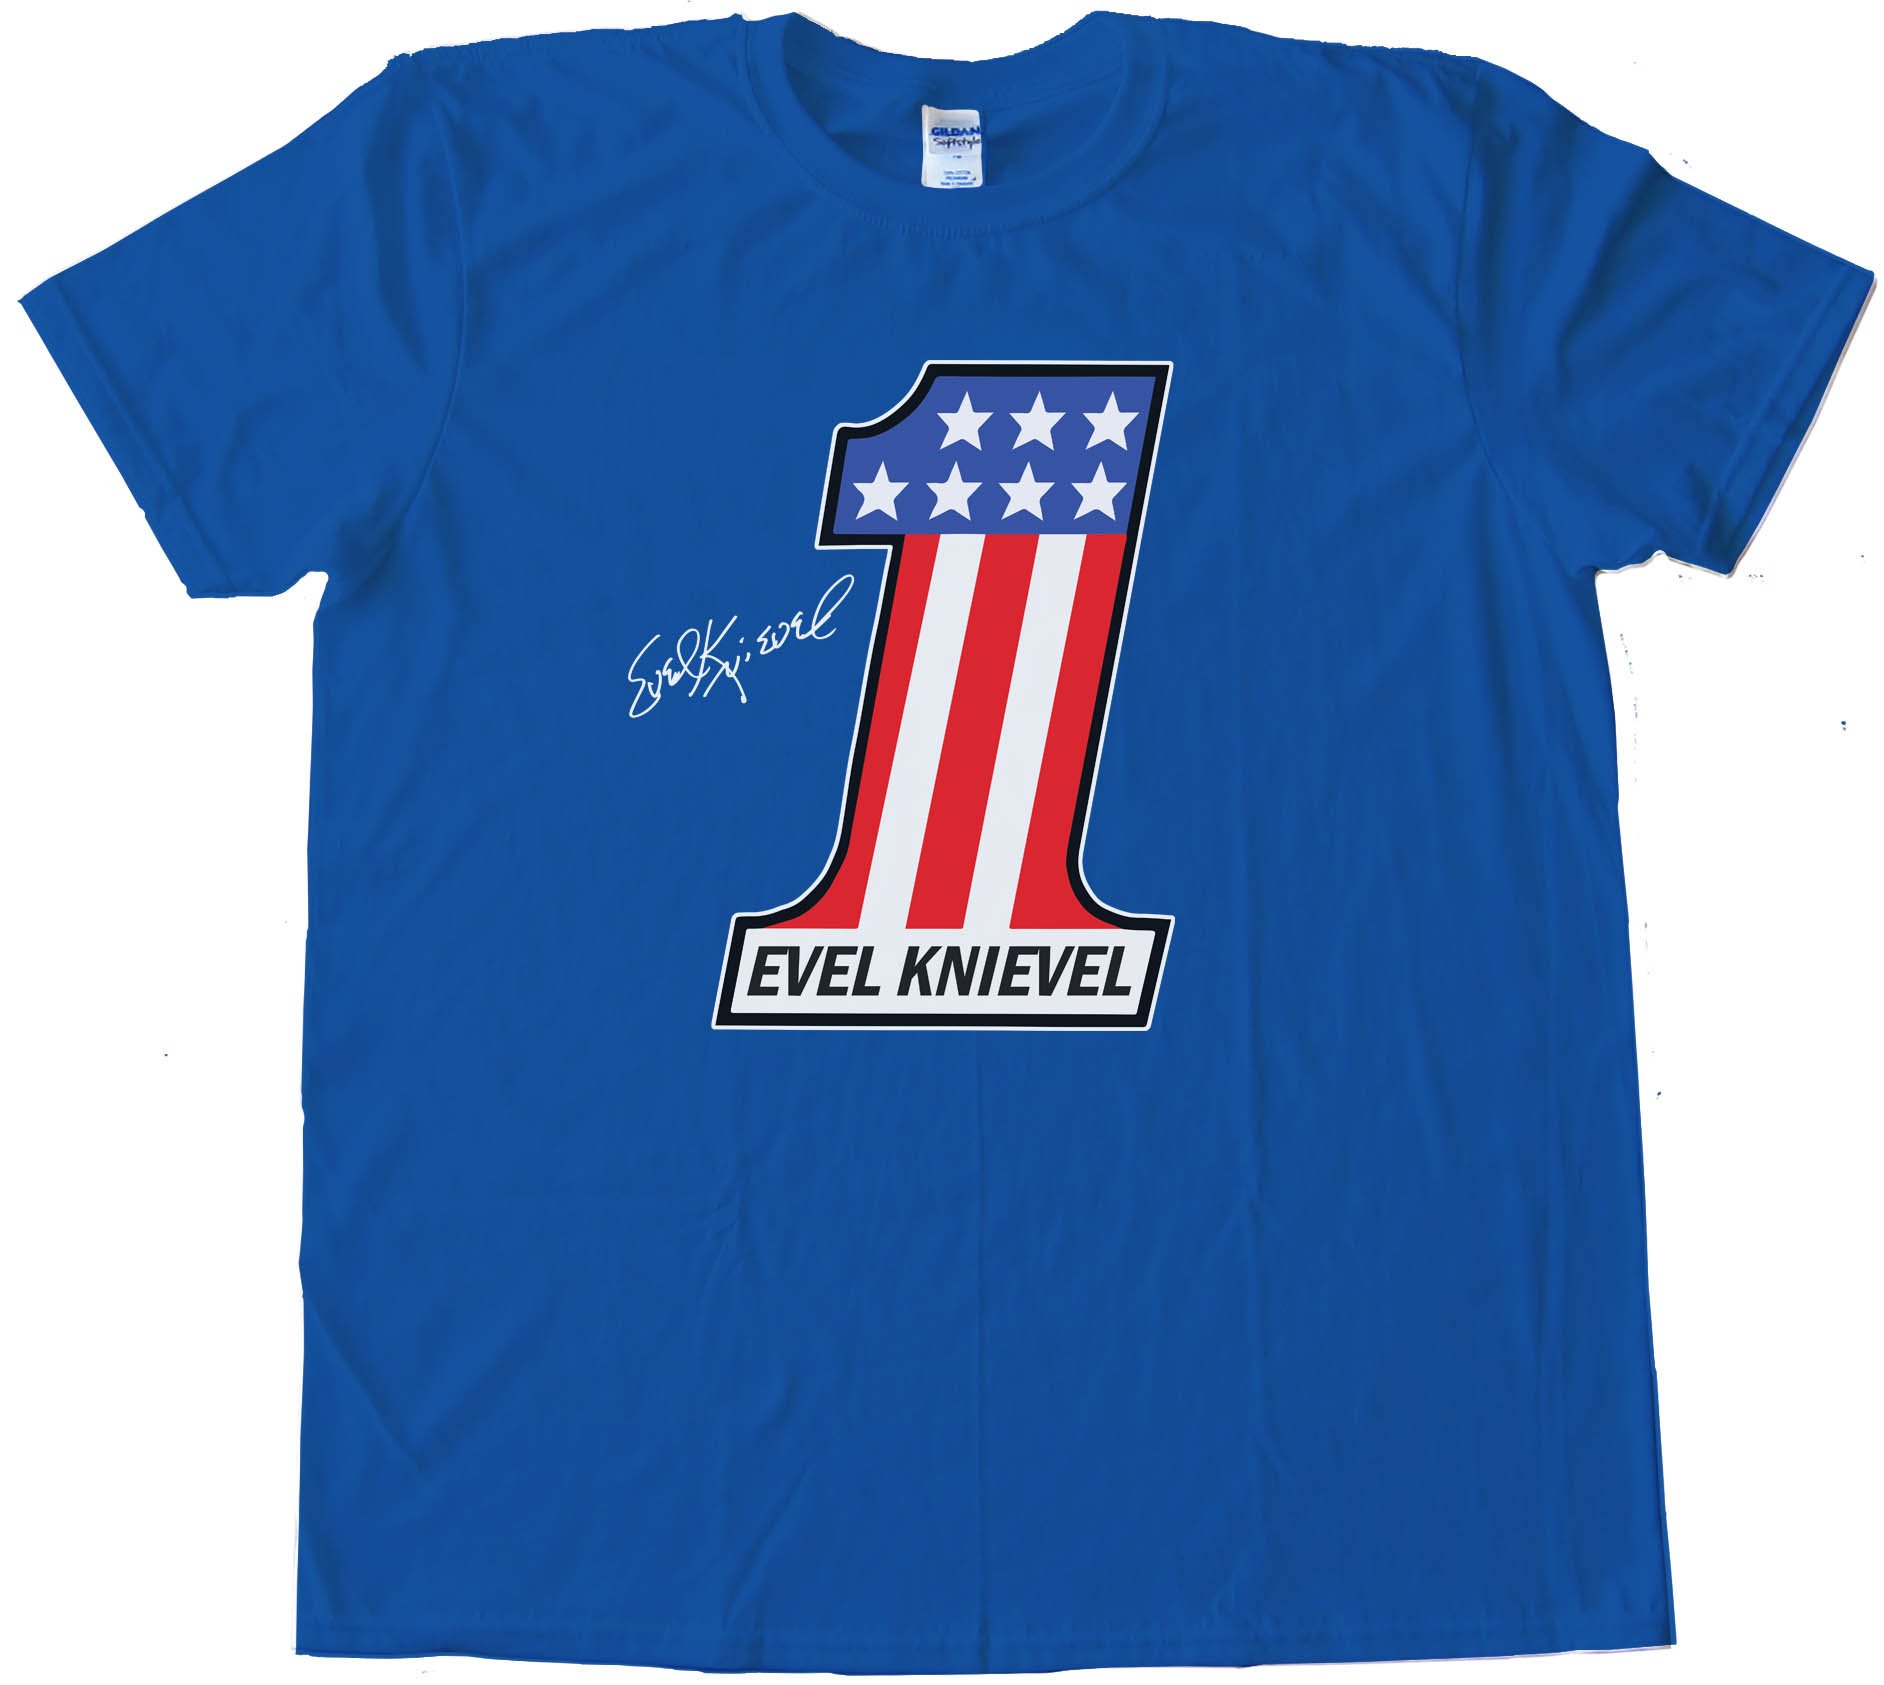 Evel Knievel The Greatest American Stuntman - Tee Shirt